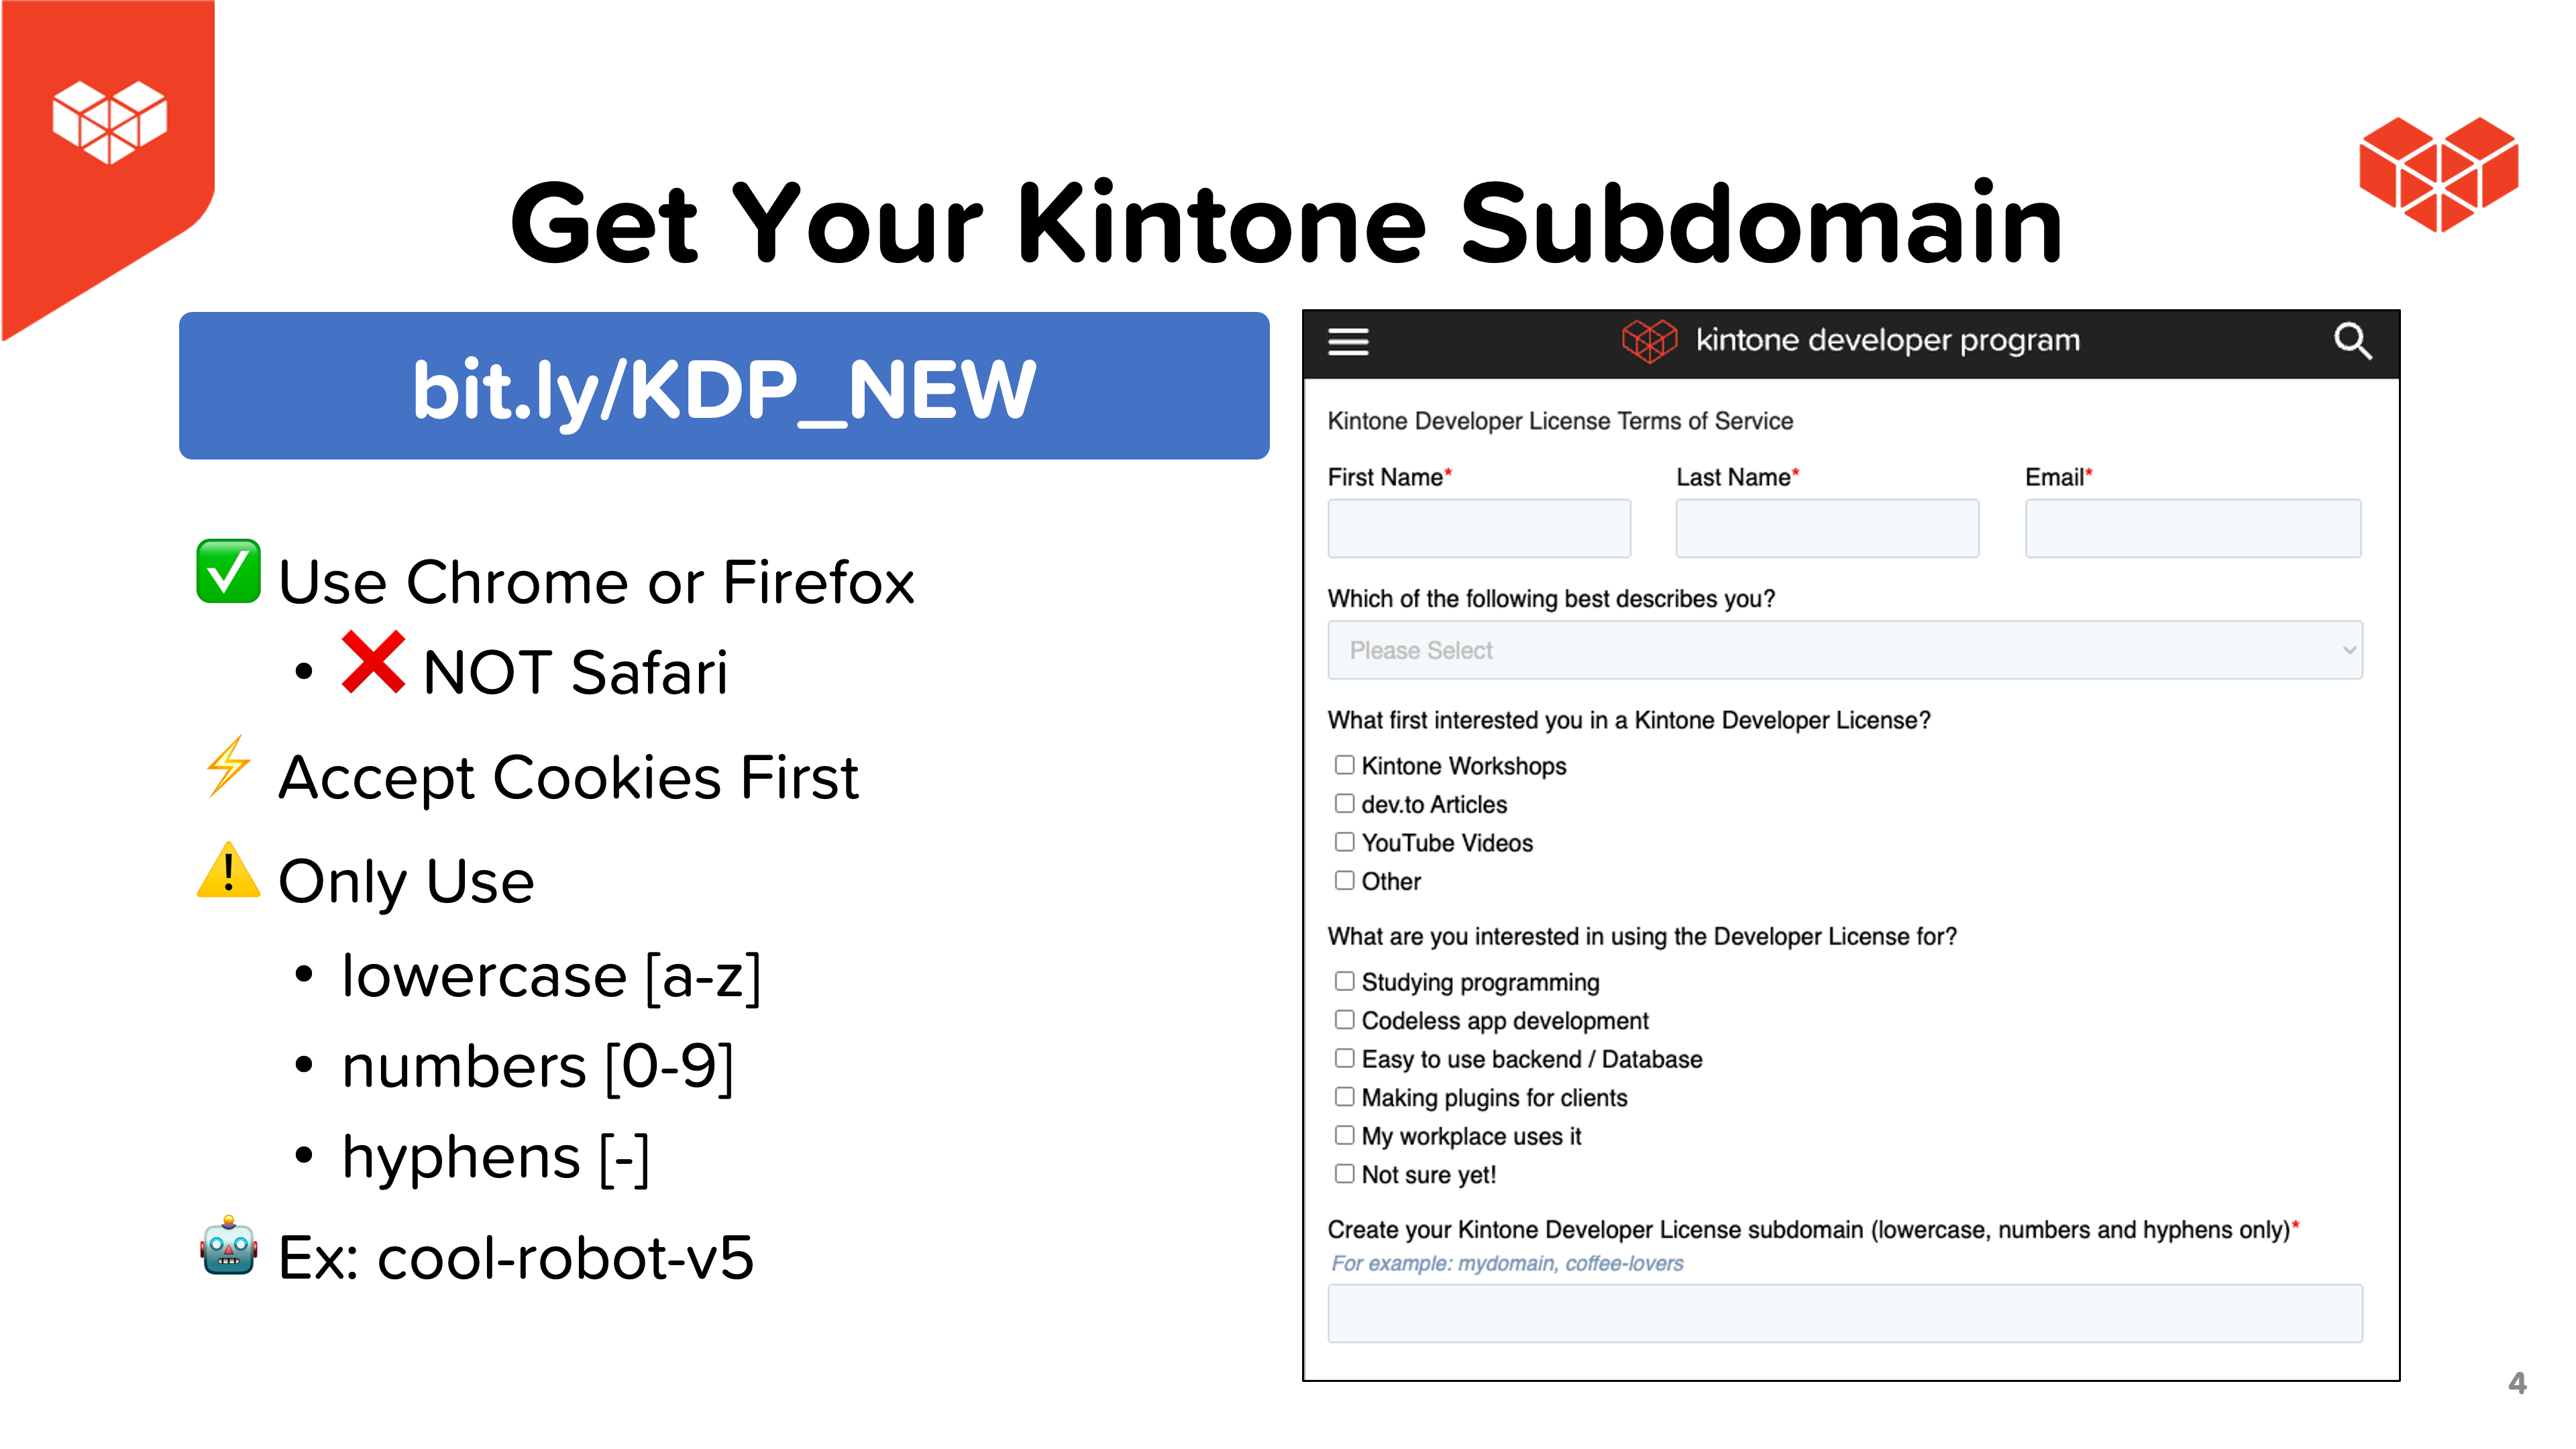 Step 1: Fill out the Kintone Developer license sign-up form